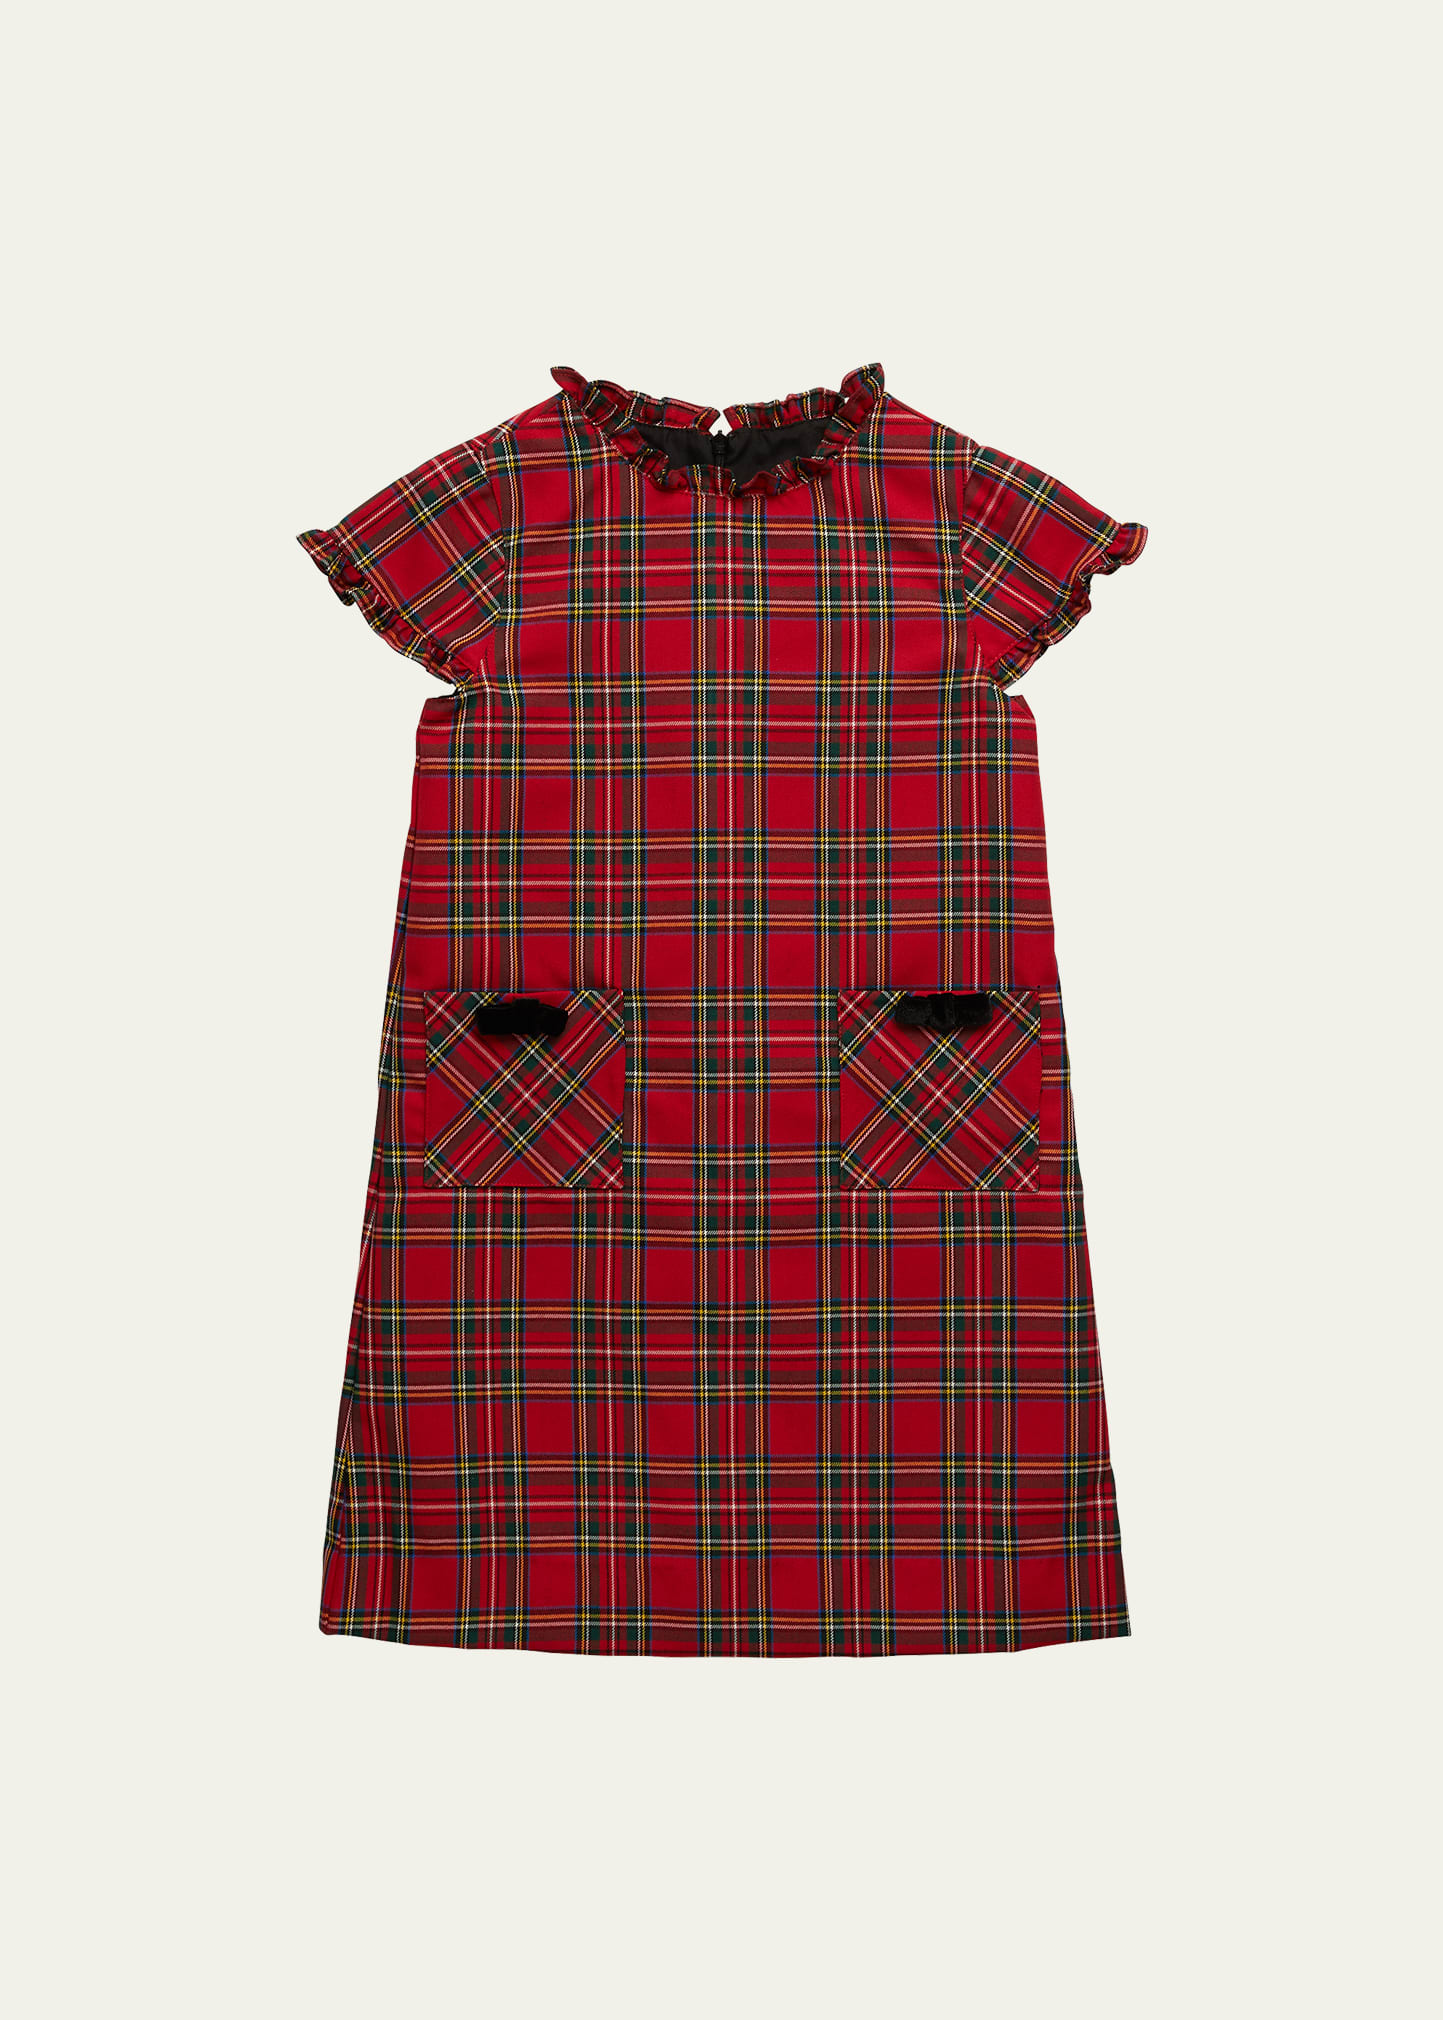 Florence Eiseman Girl's Tartan Plaid Dress, Size 4-6X